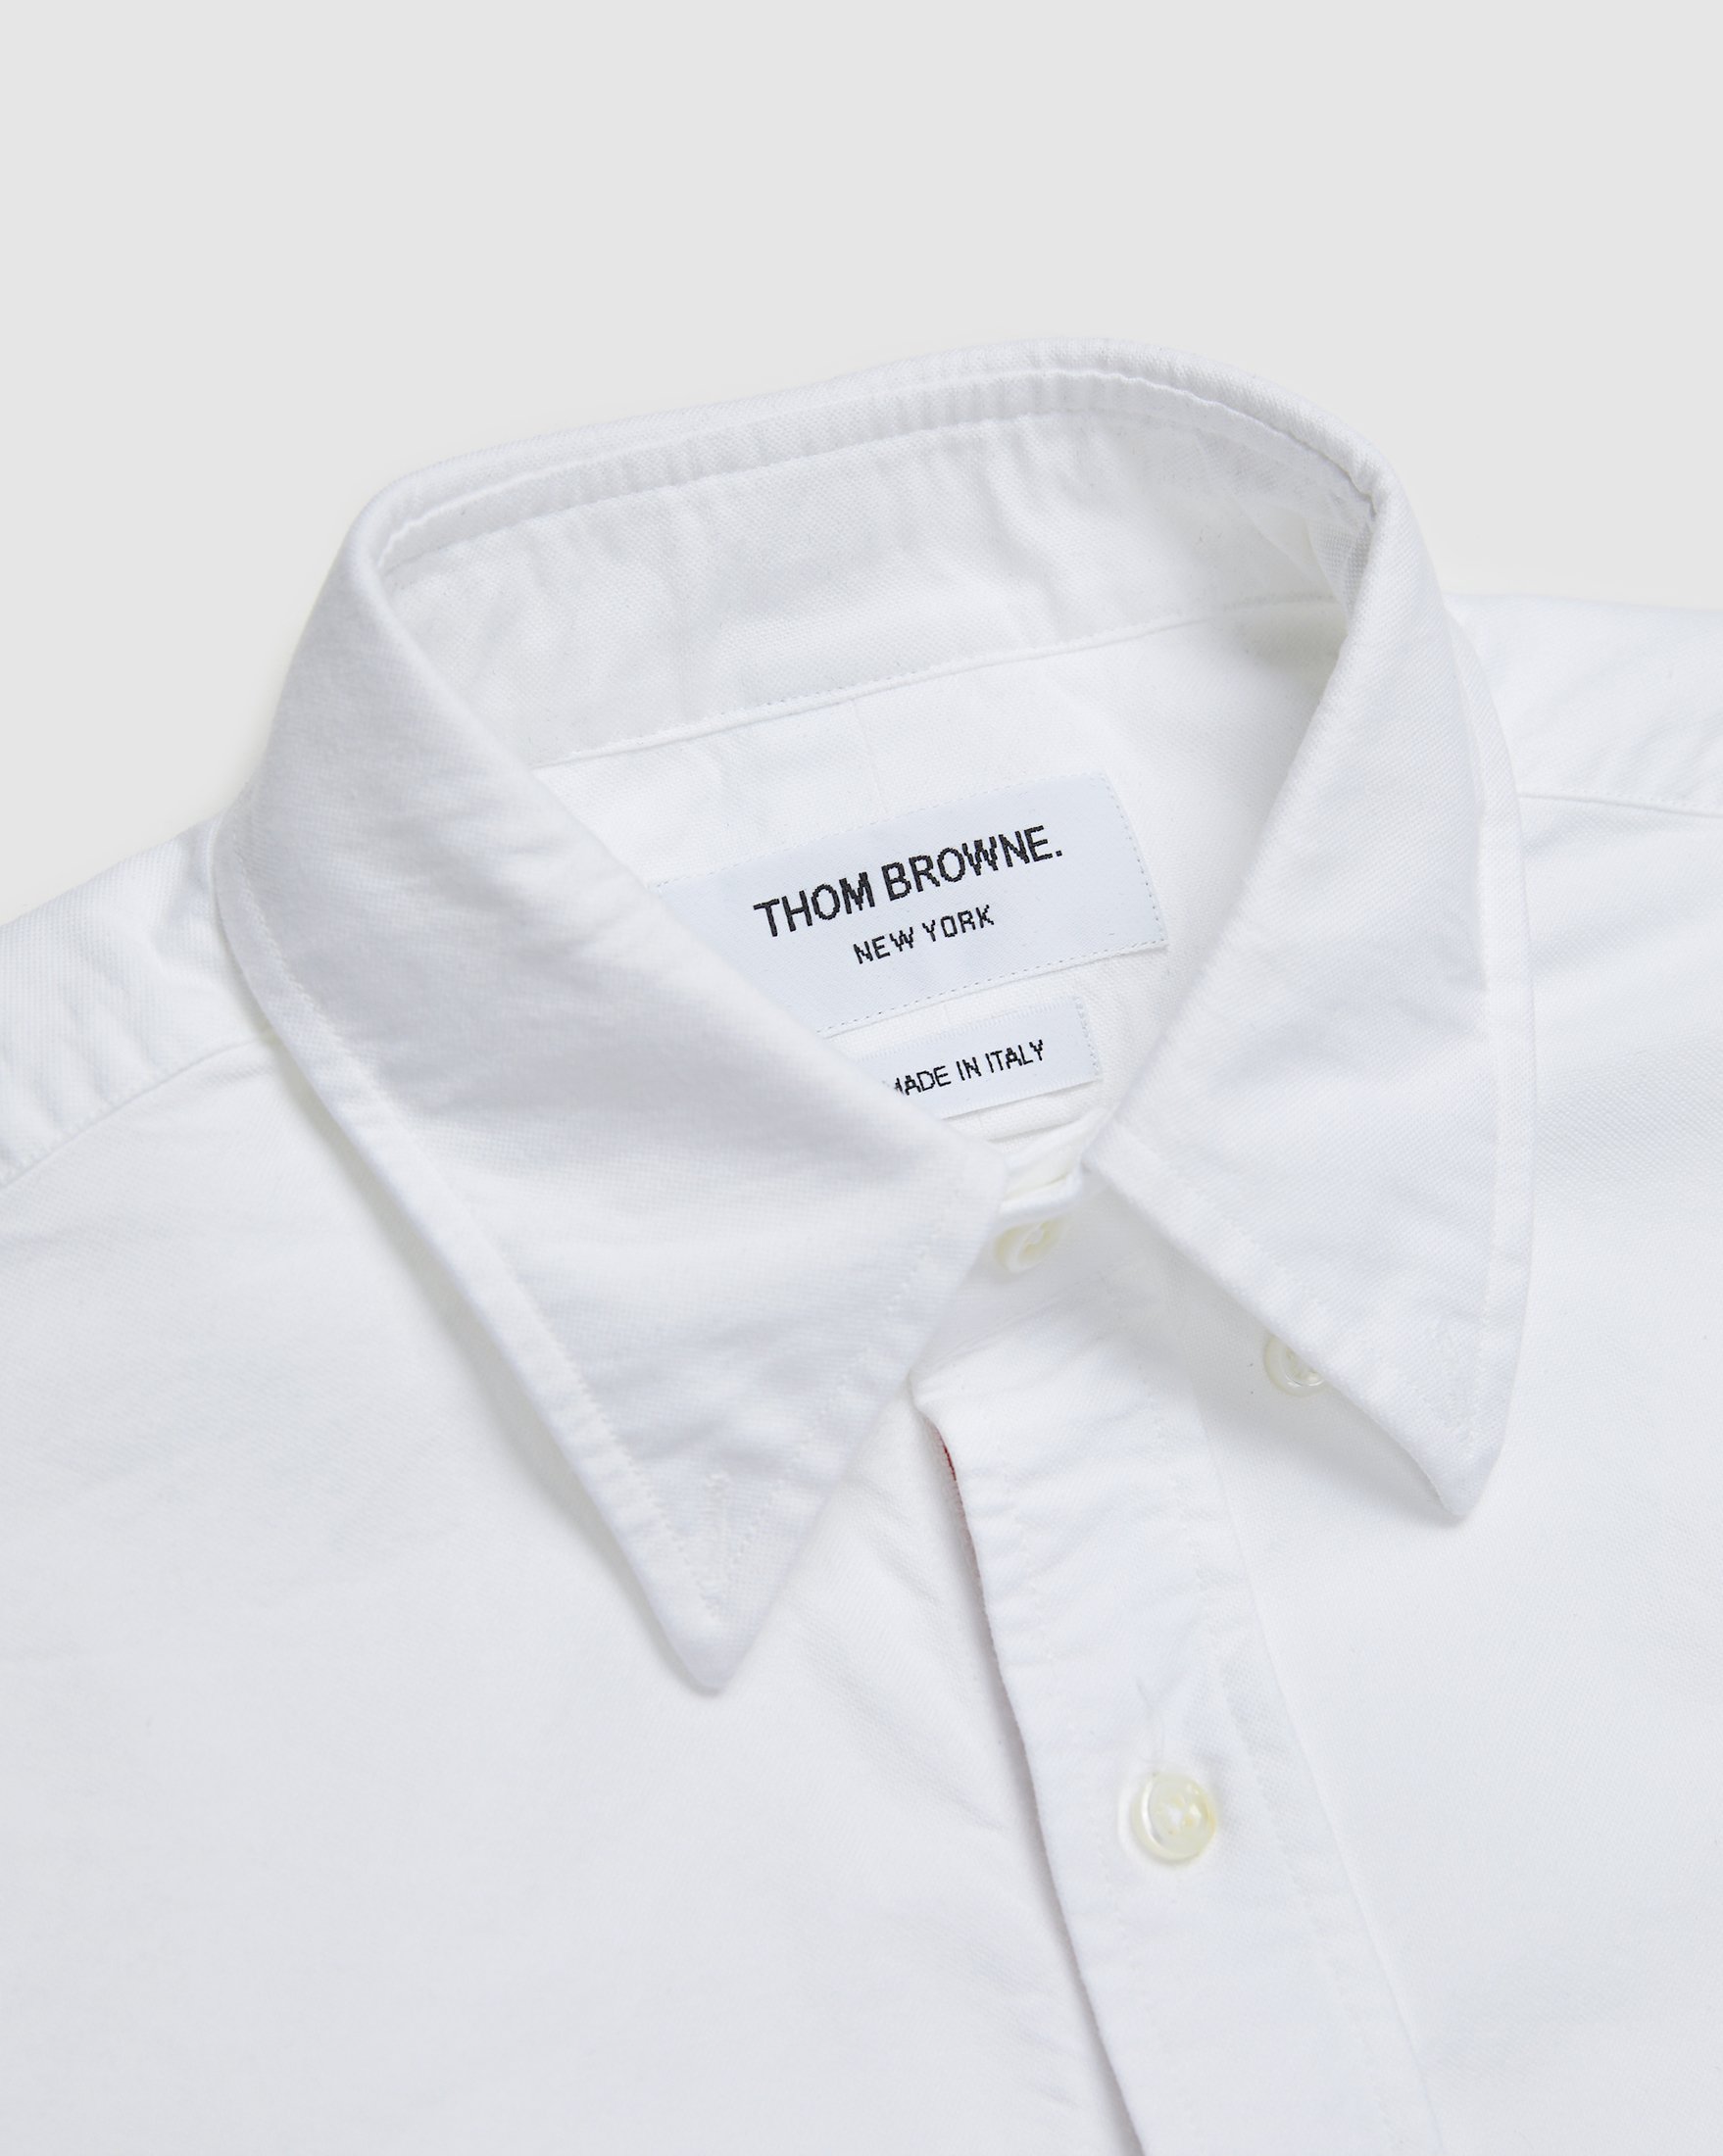 Colette Mon Amour x Thom Browne - White Eiffel Classic Shirt - Clothing - White - Image 3